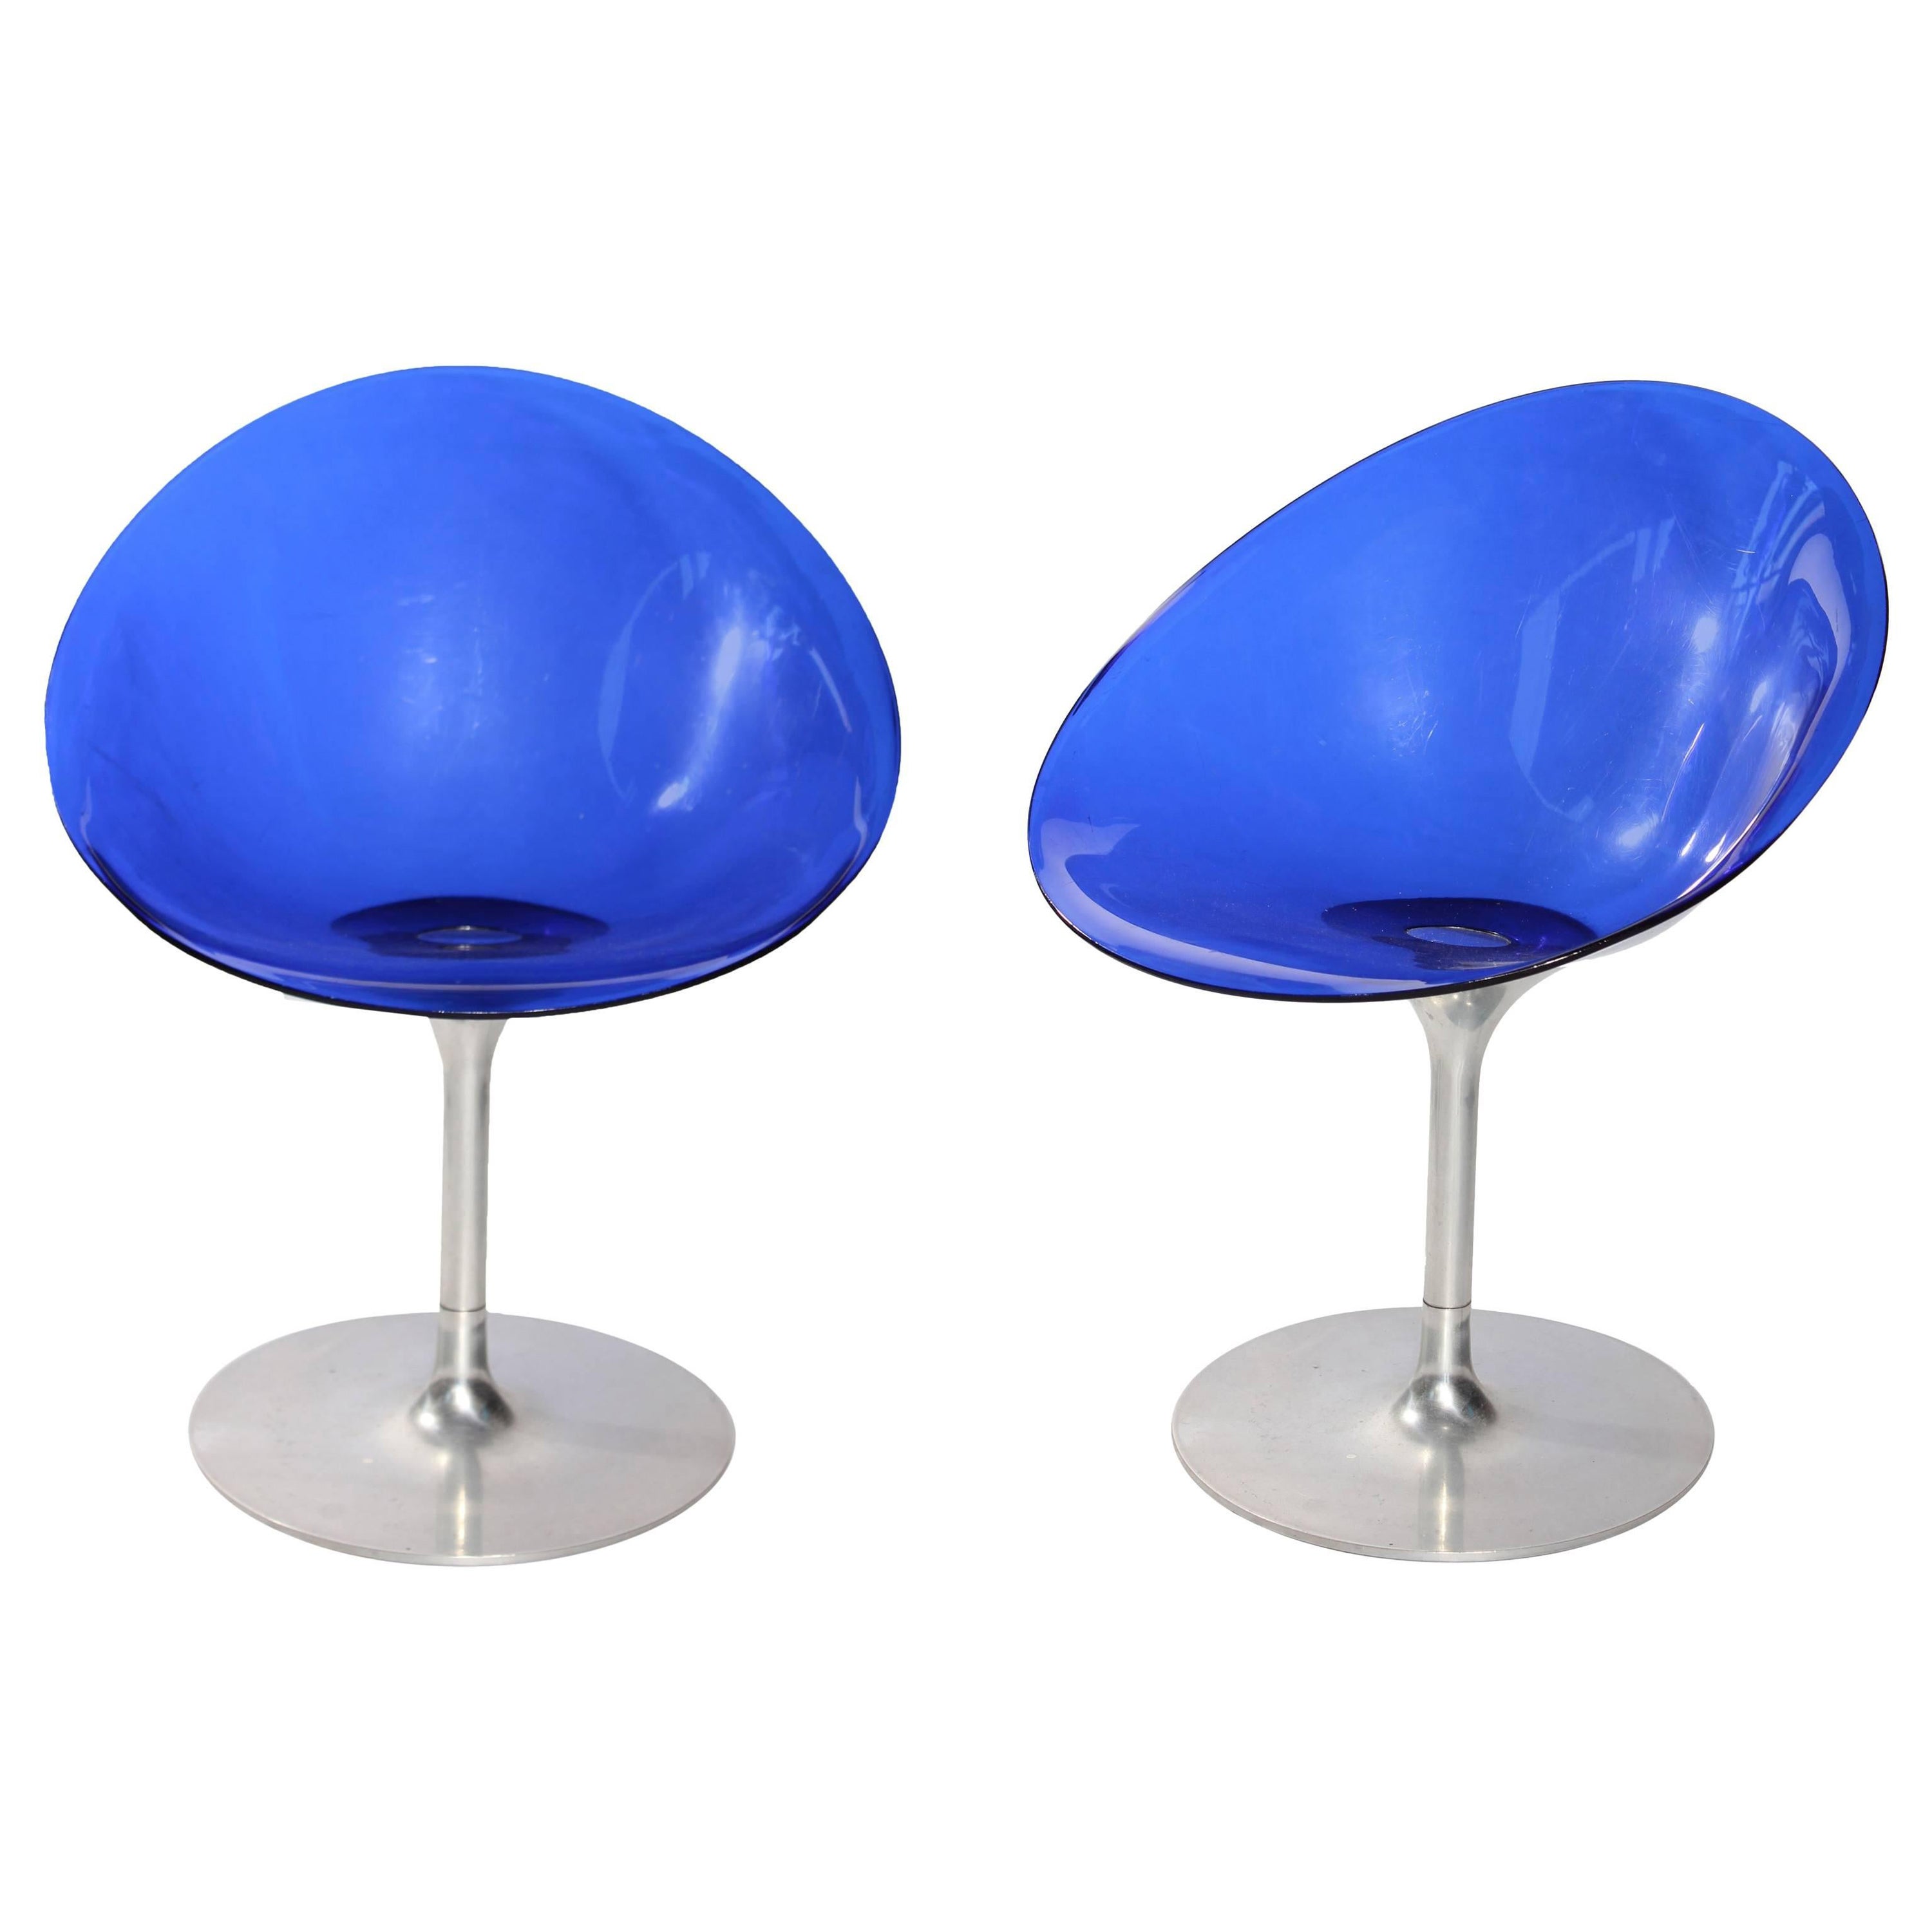 Pair of Philippe Starck "Eros" by Kartell Blue Italian Lucite Swivel Chairs